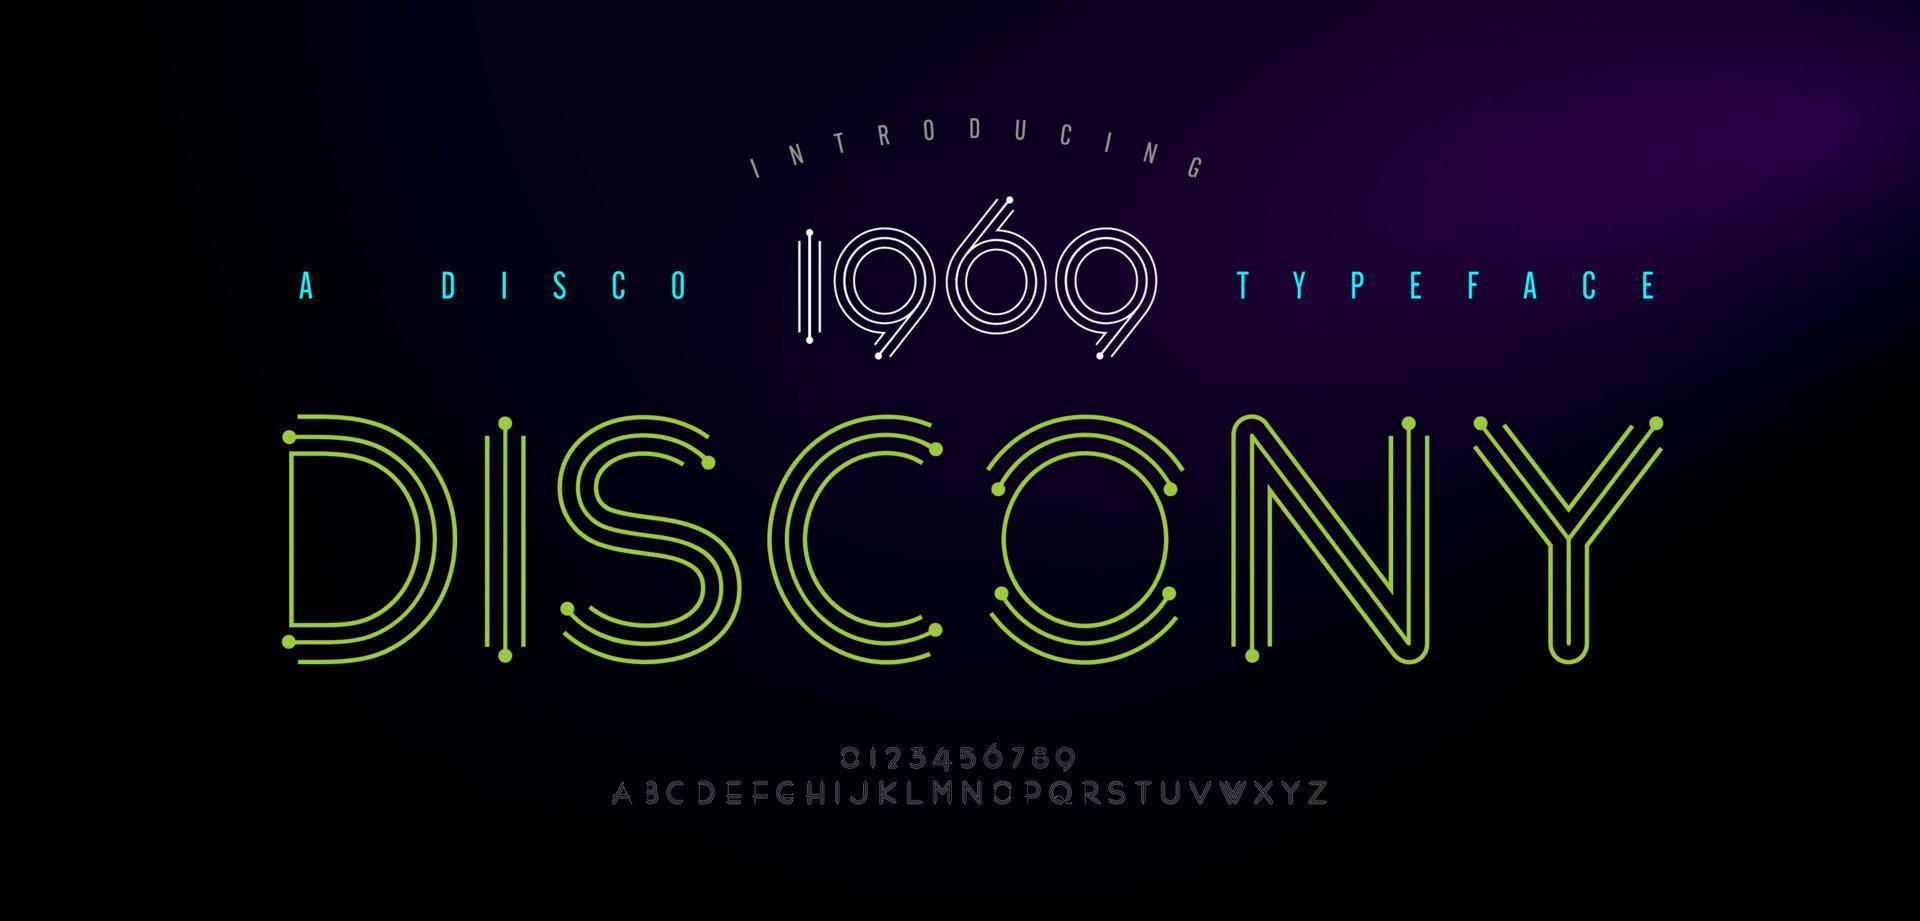 Disco retro alphabet fontsand number. Typography modern minimal urban digital neon disco future creative logo font. vector illustration